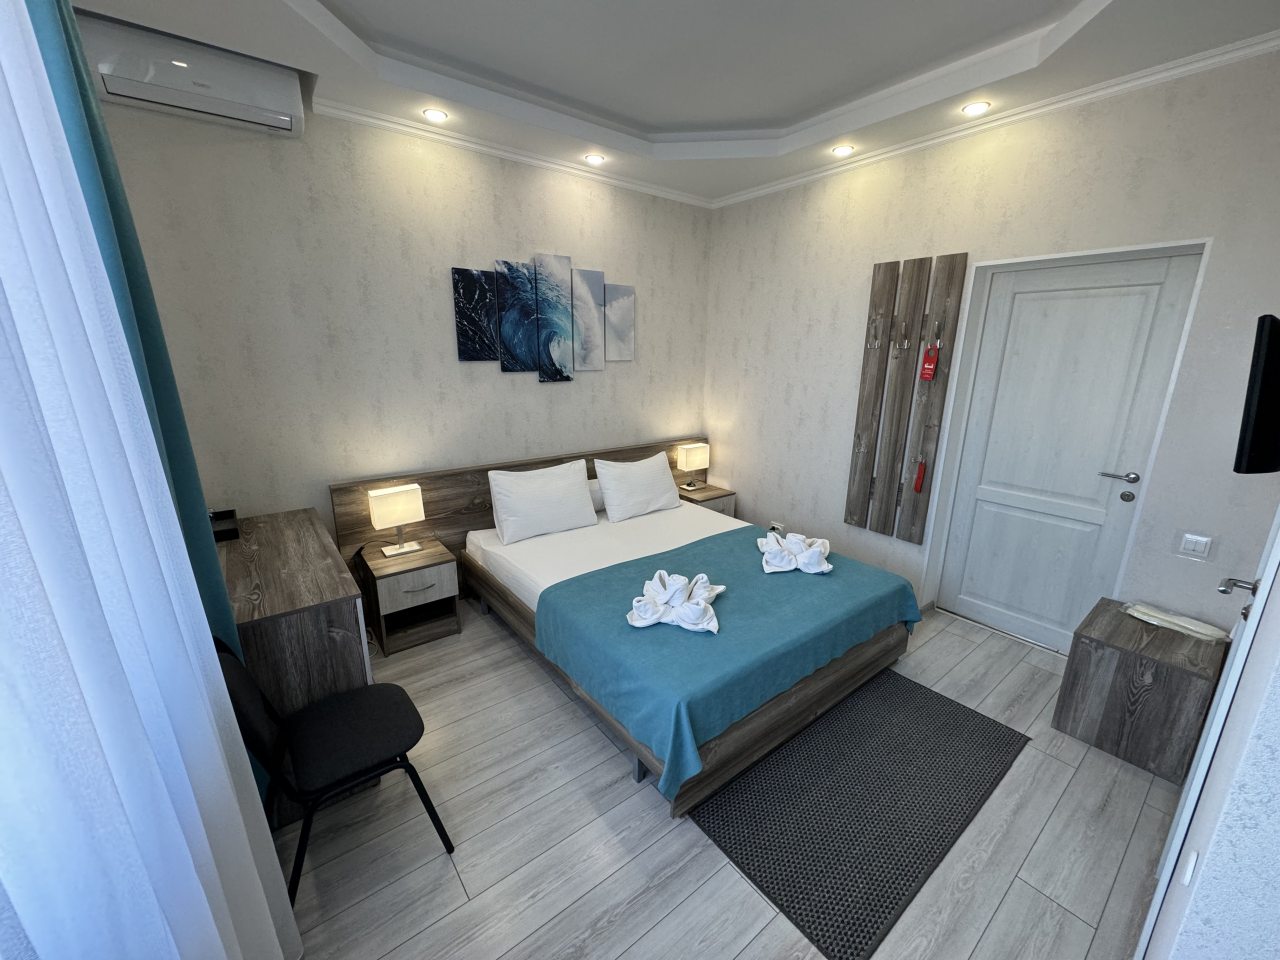 Двухместный (Двухместный стандарт с видом на море DBL / Standard double room with sea view DBL) гостиницы VIVAT, Новороссийск